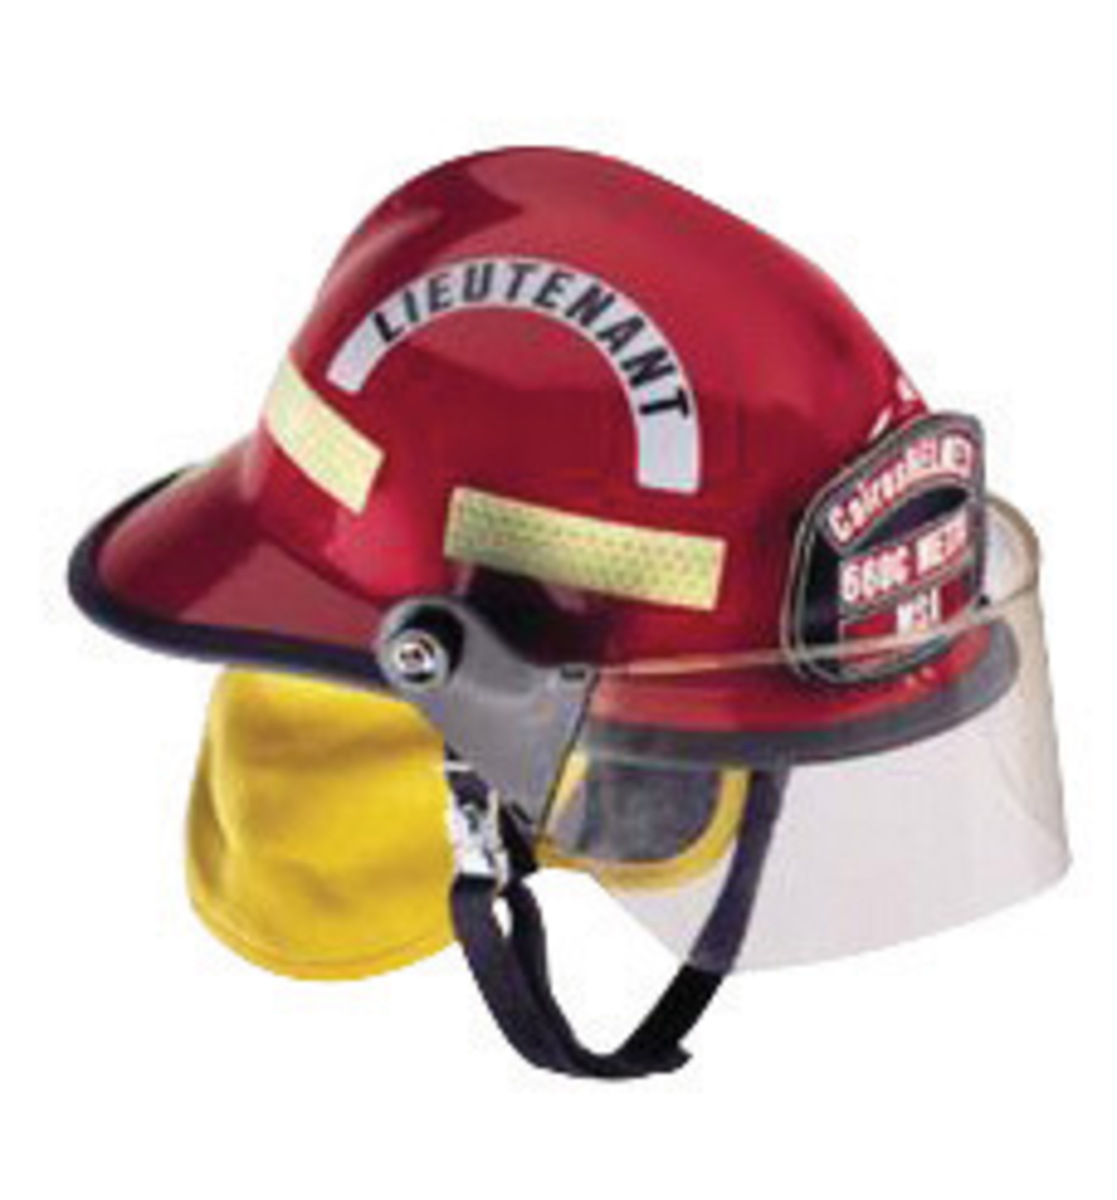 MSA Red Cairns® Fiberglass Cap Style Fire Helmet With Ratchet Suspension